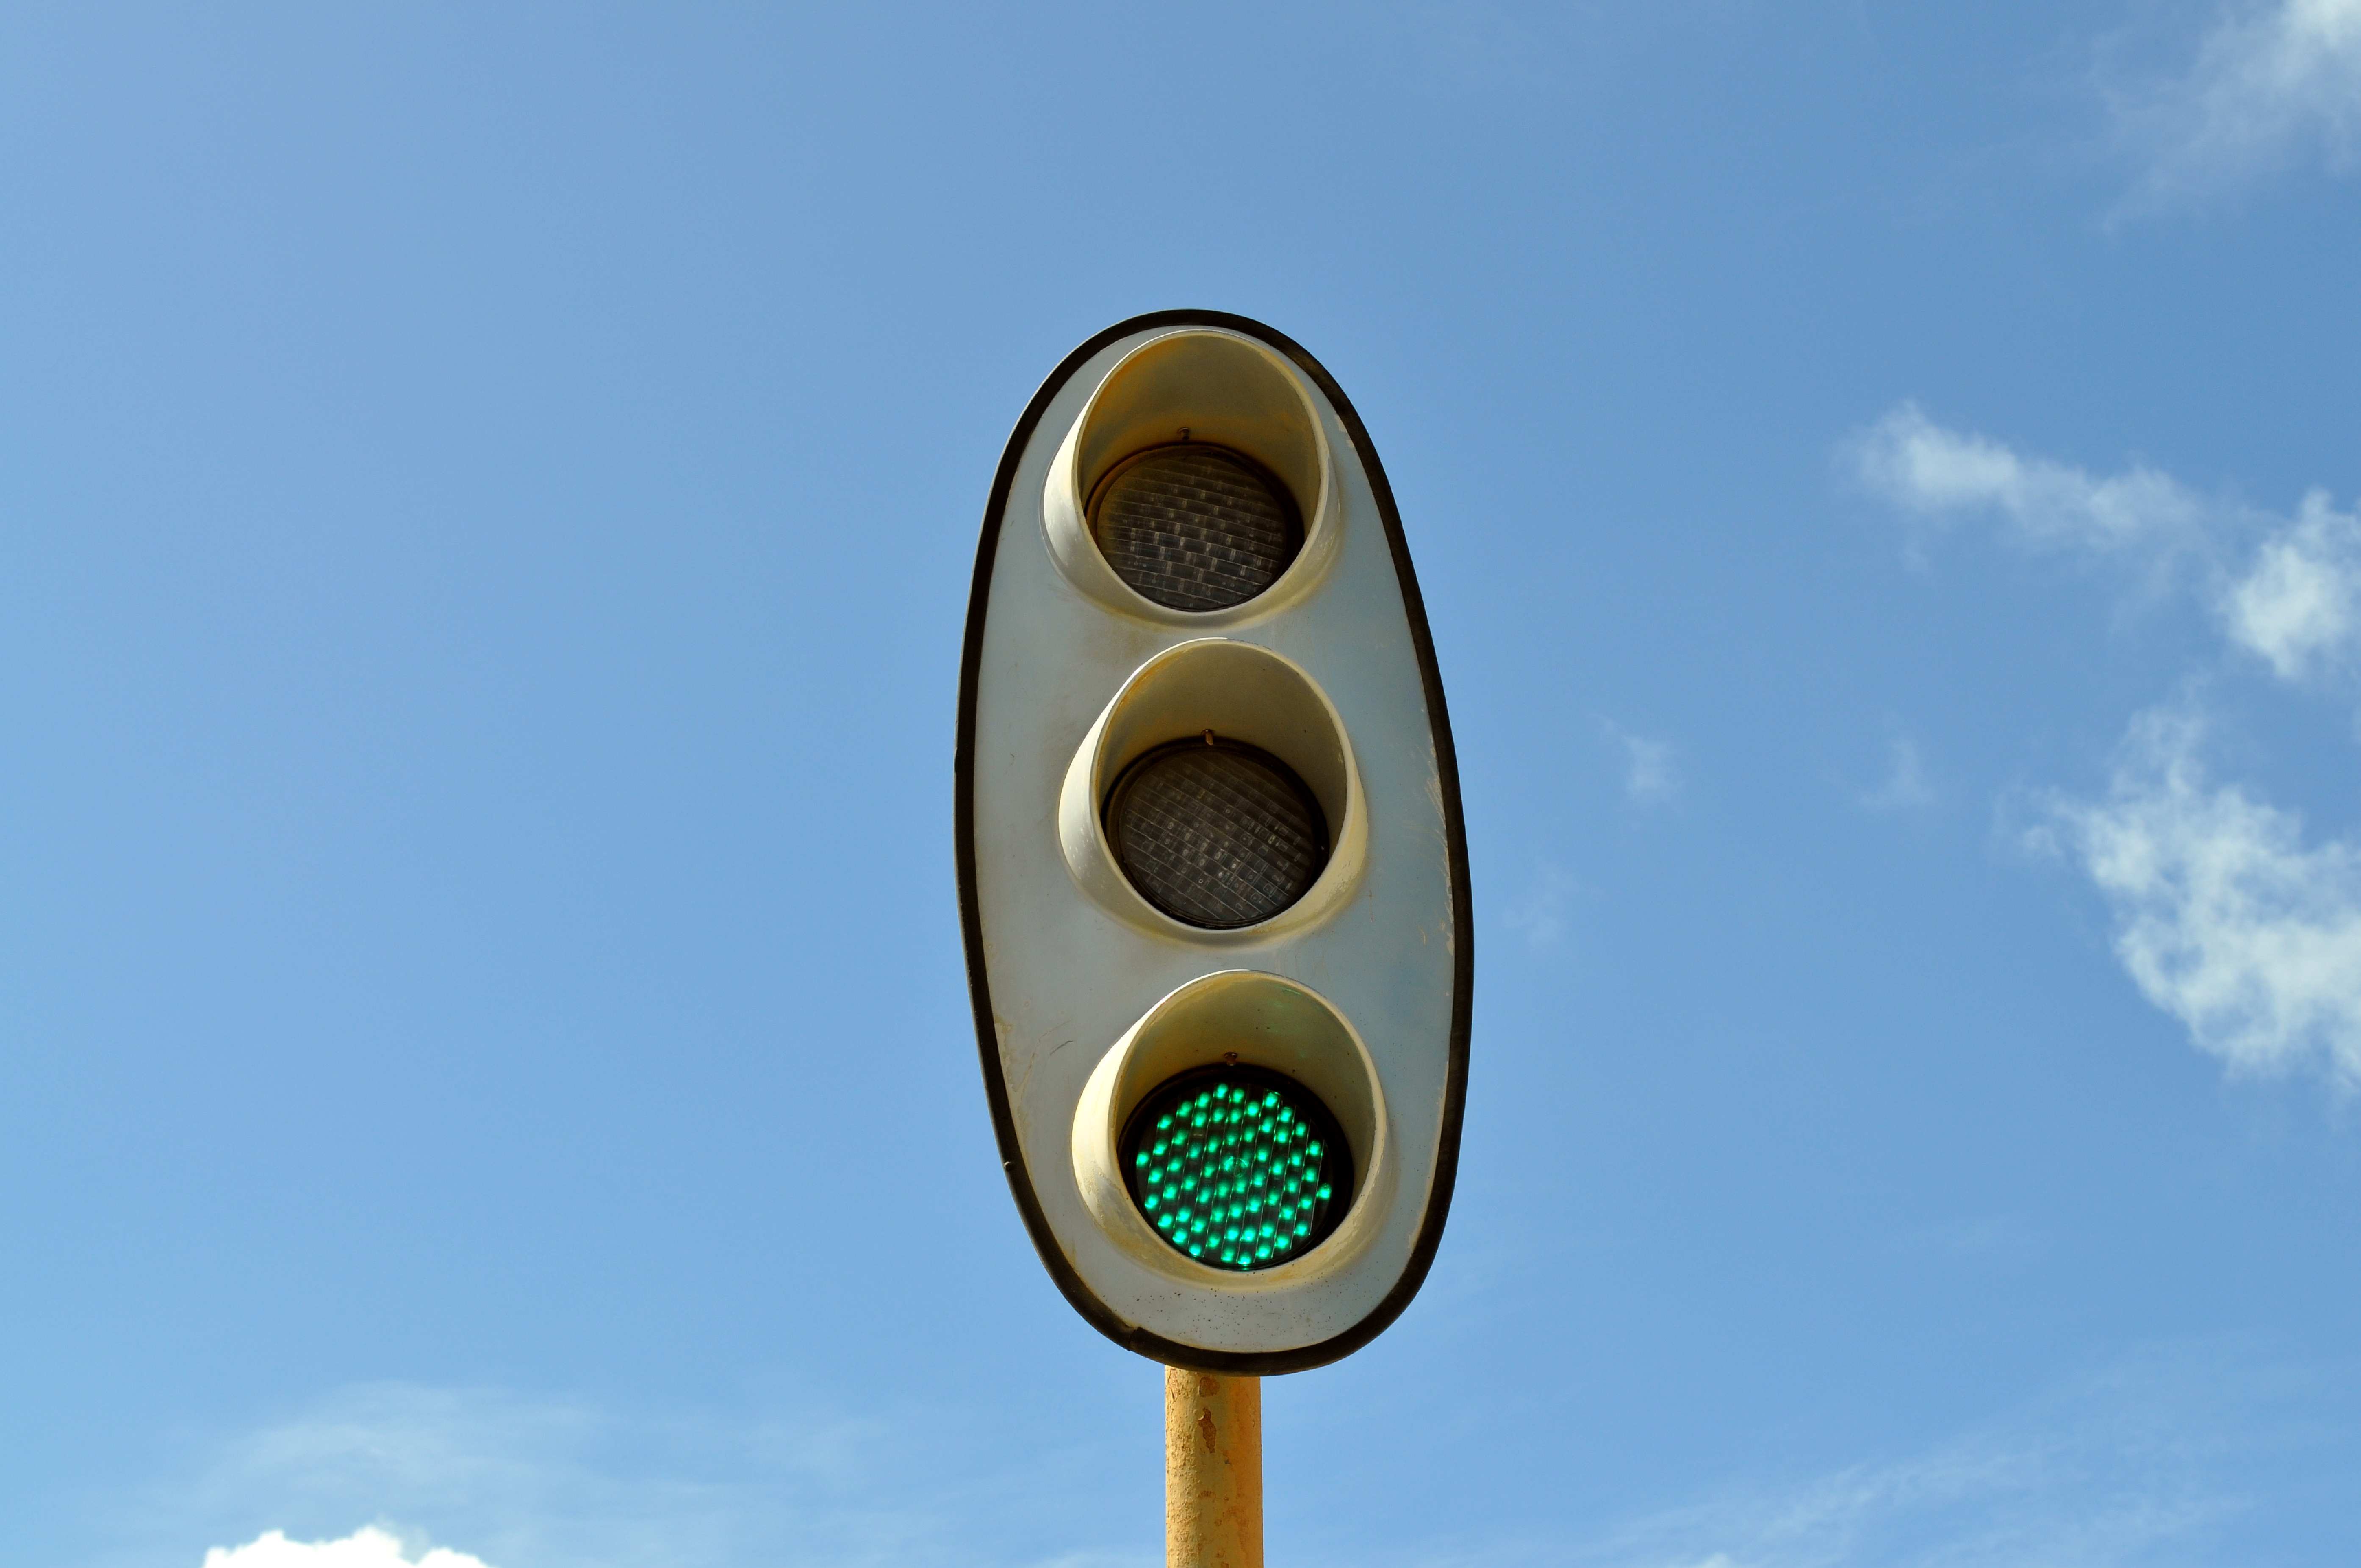 Зеленый светофор жд. Зеленый свет светофора. Зеленый цвет светофора. Японский светофор. Traffic Light Green Light.